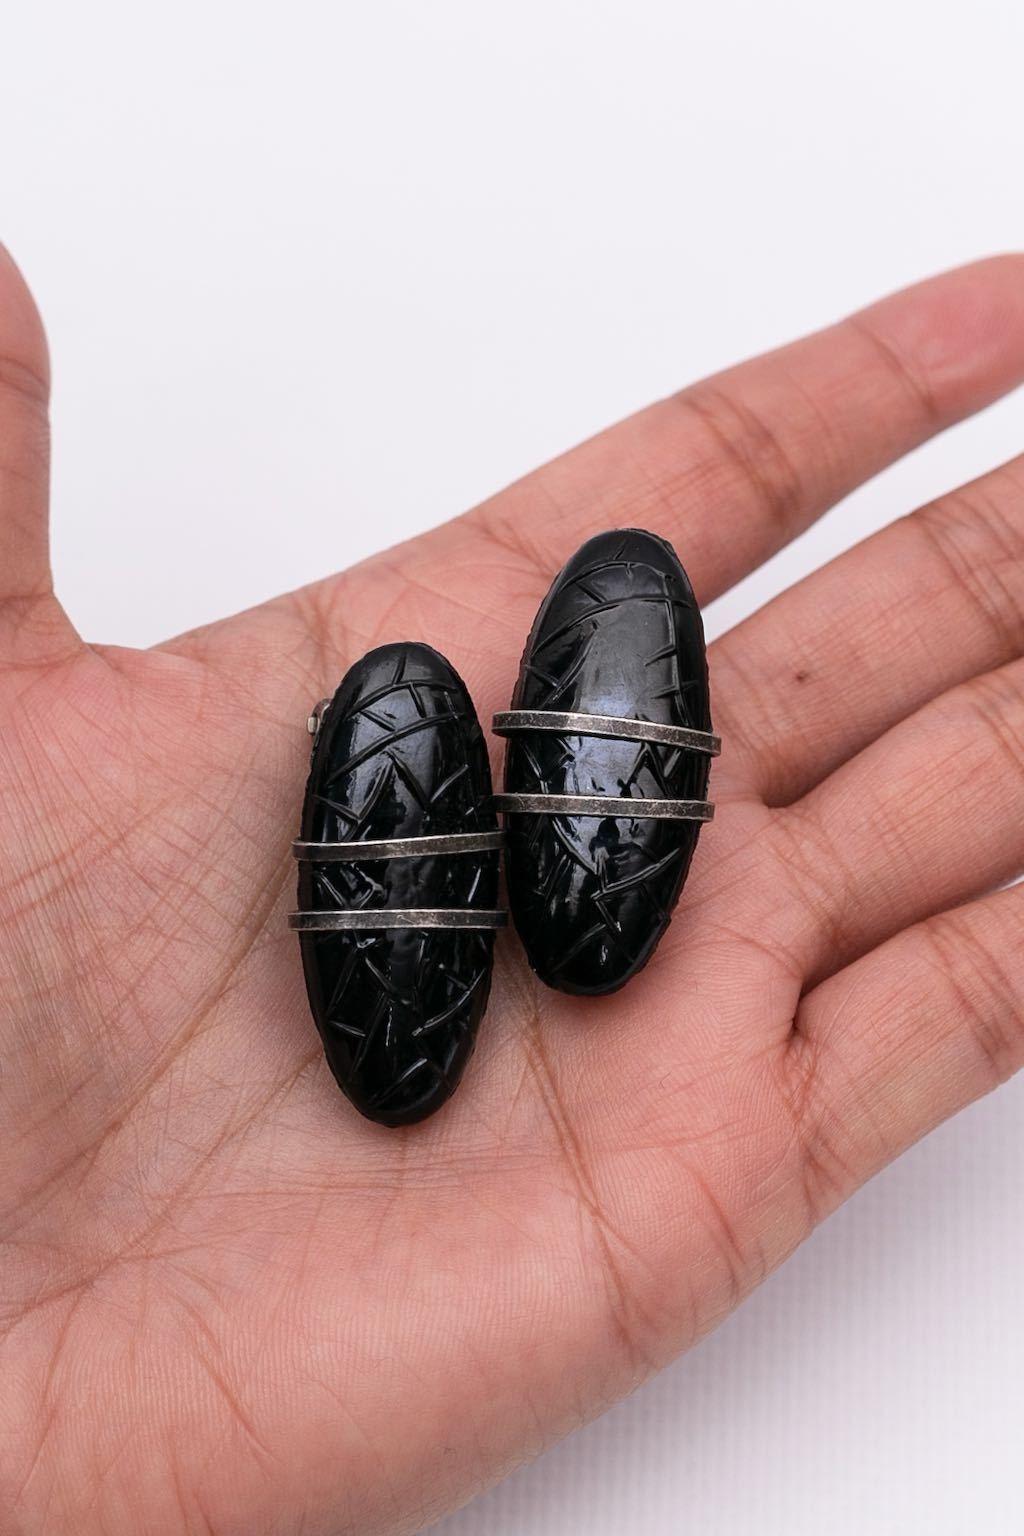 Yves Saint Laurent Blackened Metal Earrings For Sale 6